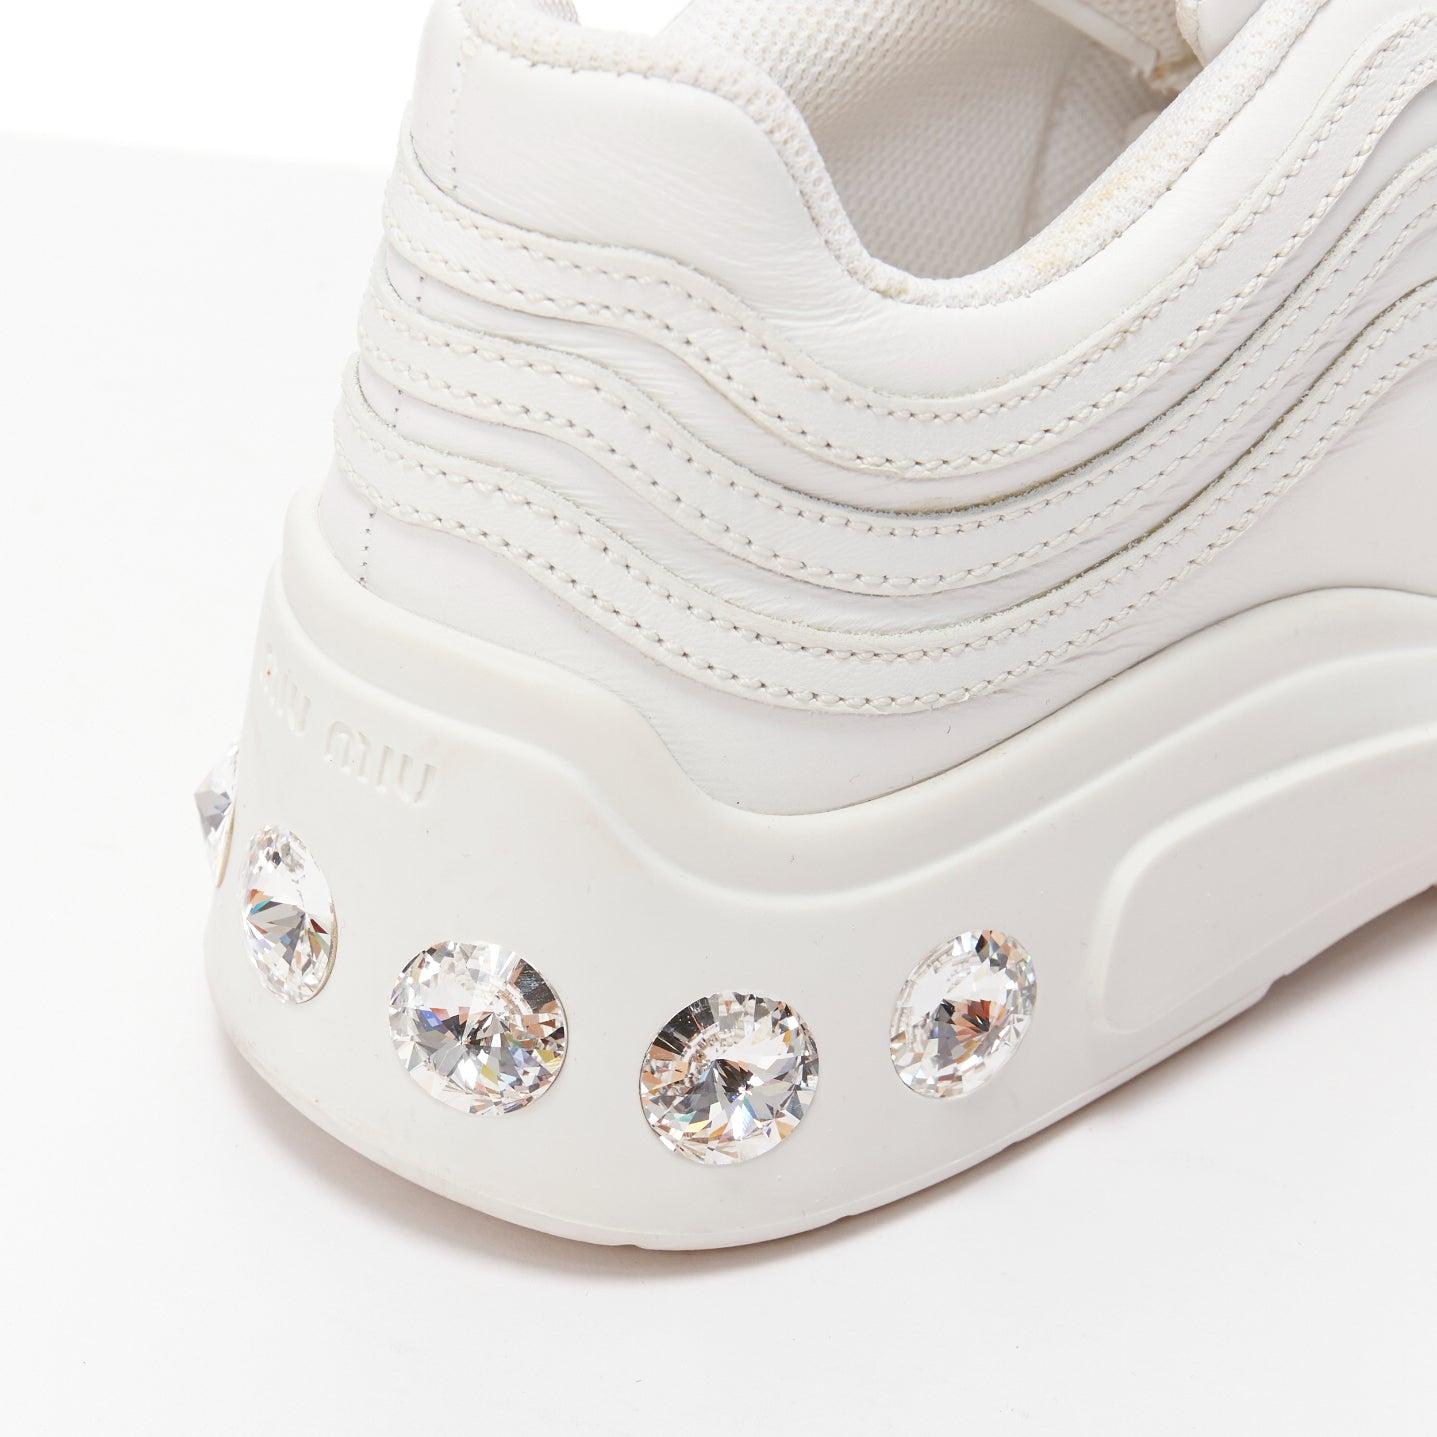 MIU MIU white leather logo tongue clear big crystal heels chunky sneakers EU38 For Sale 4